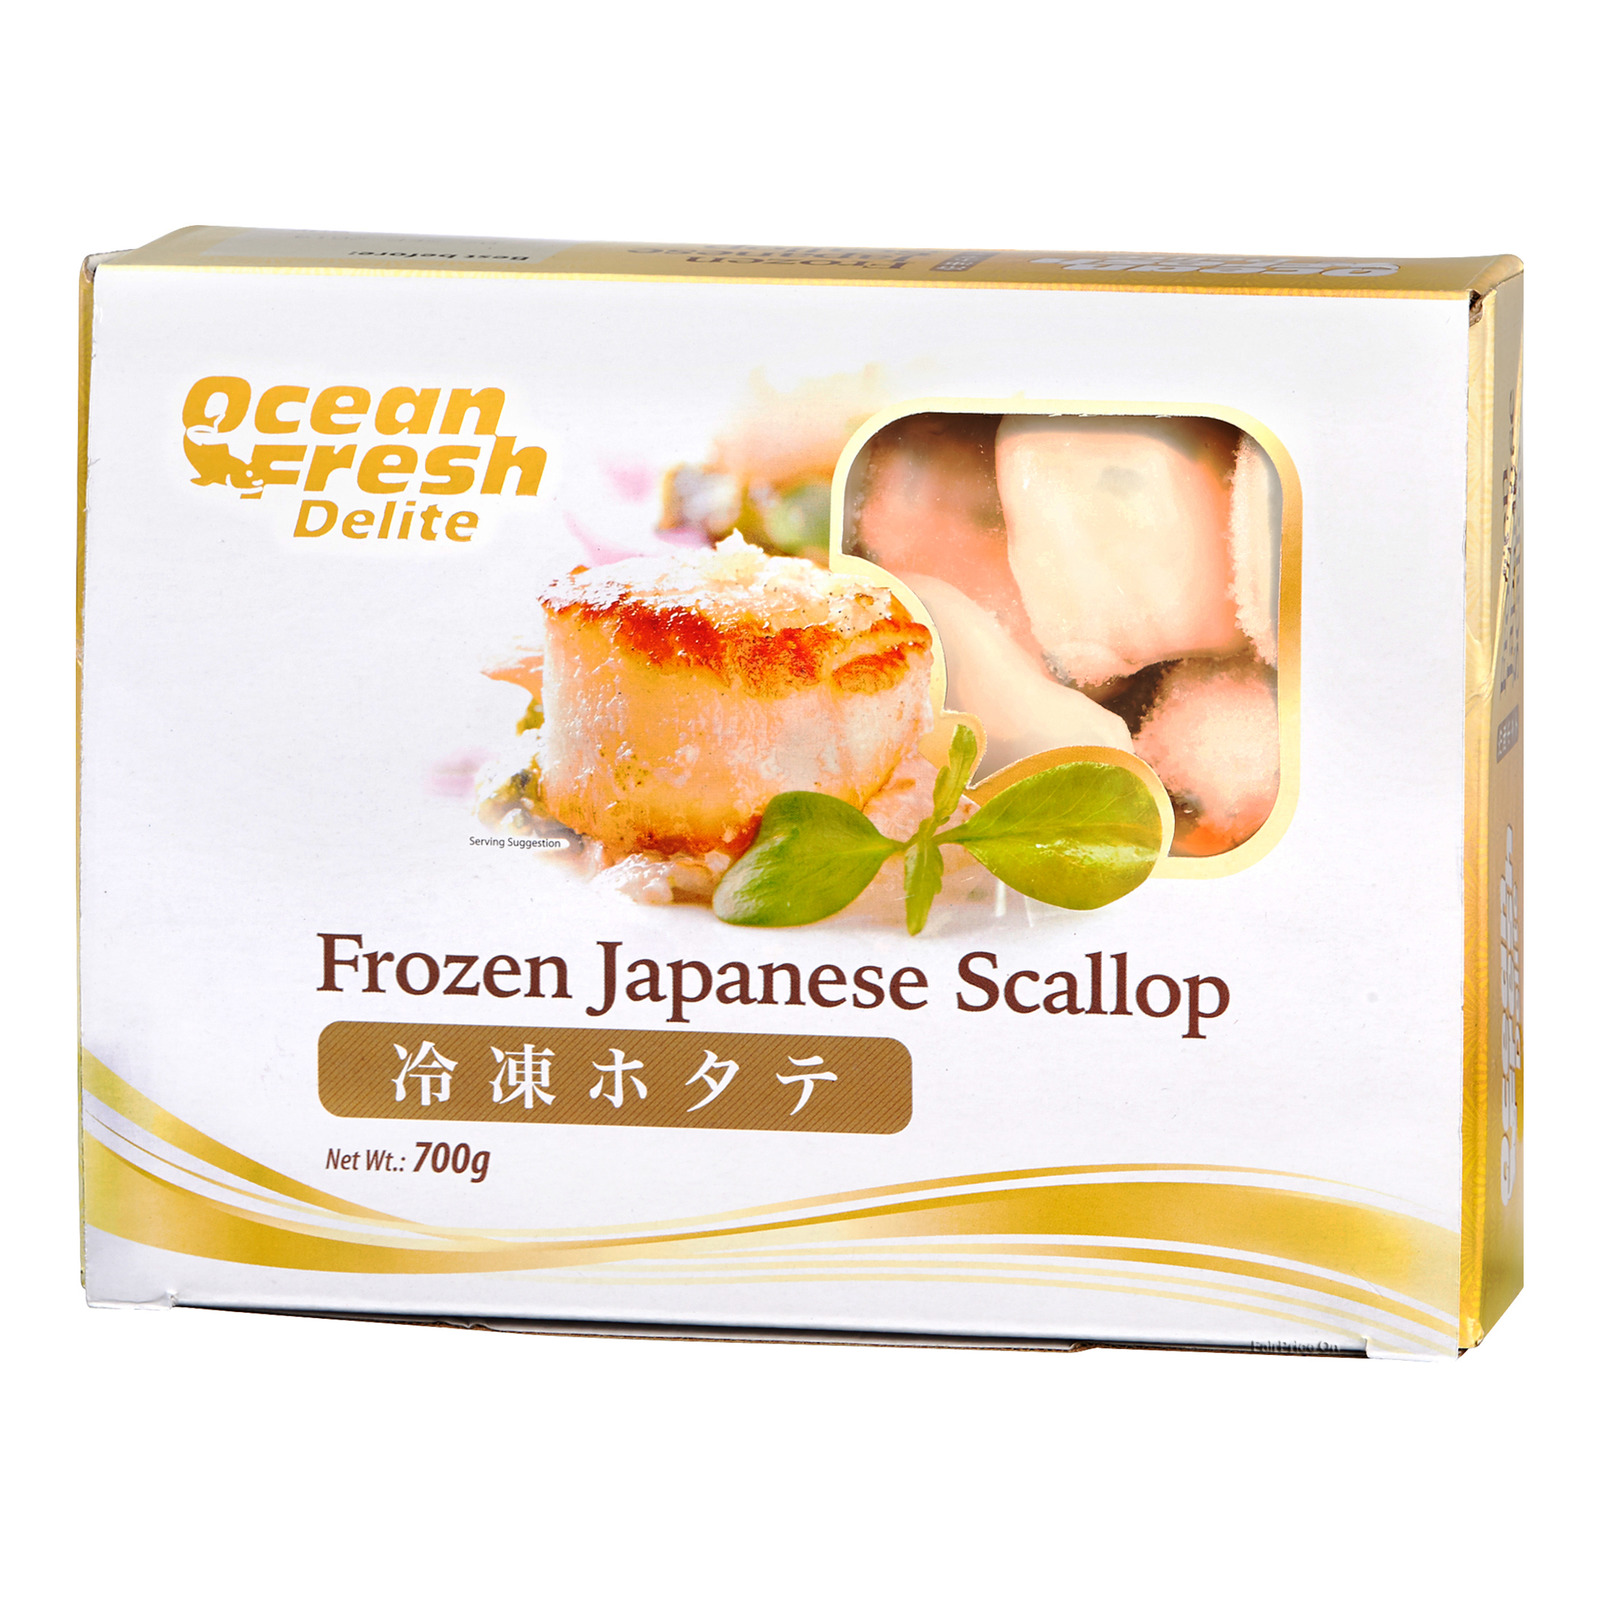 Ocean Fresh Delite Frozen Japanese Scallop